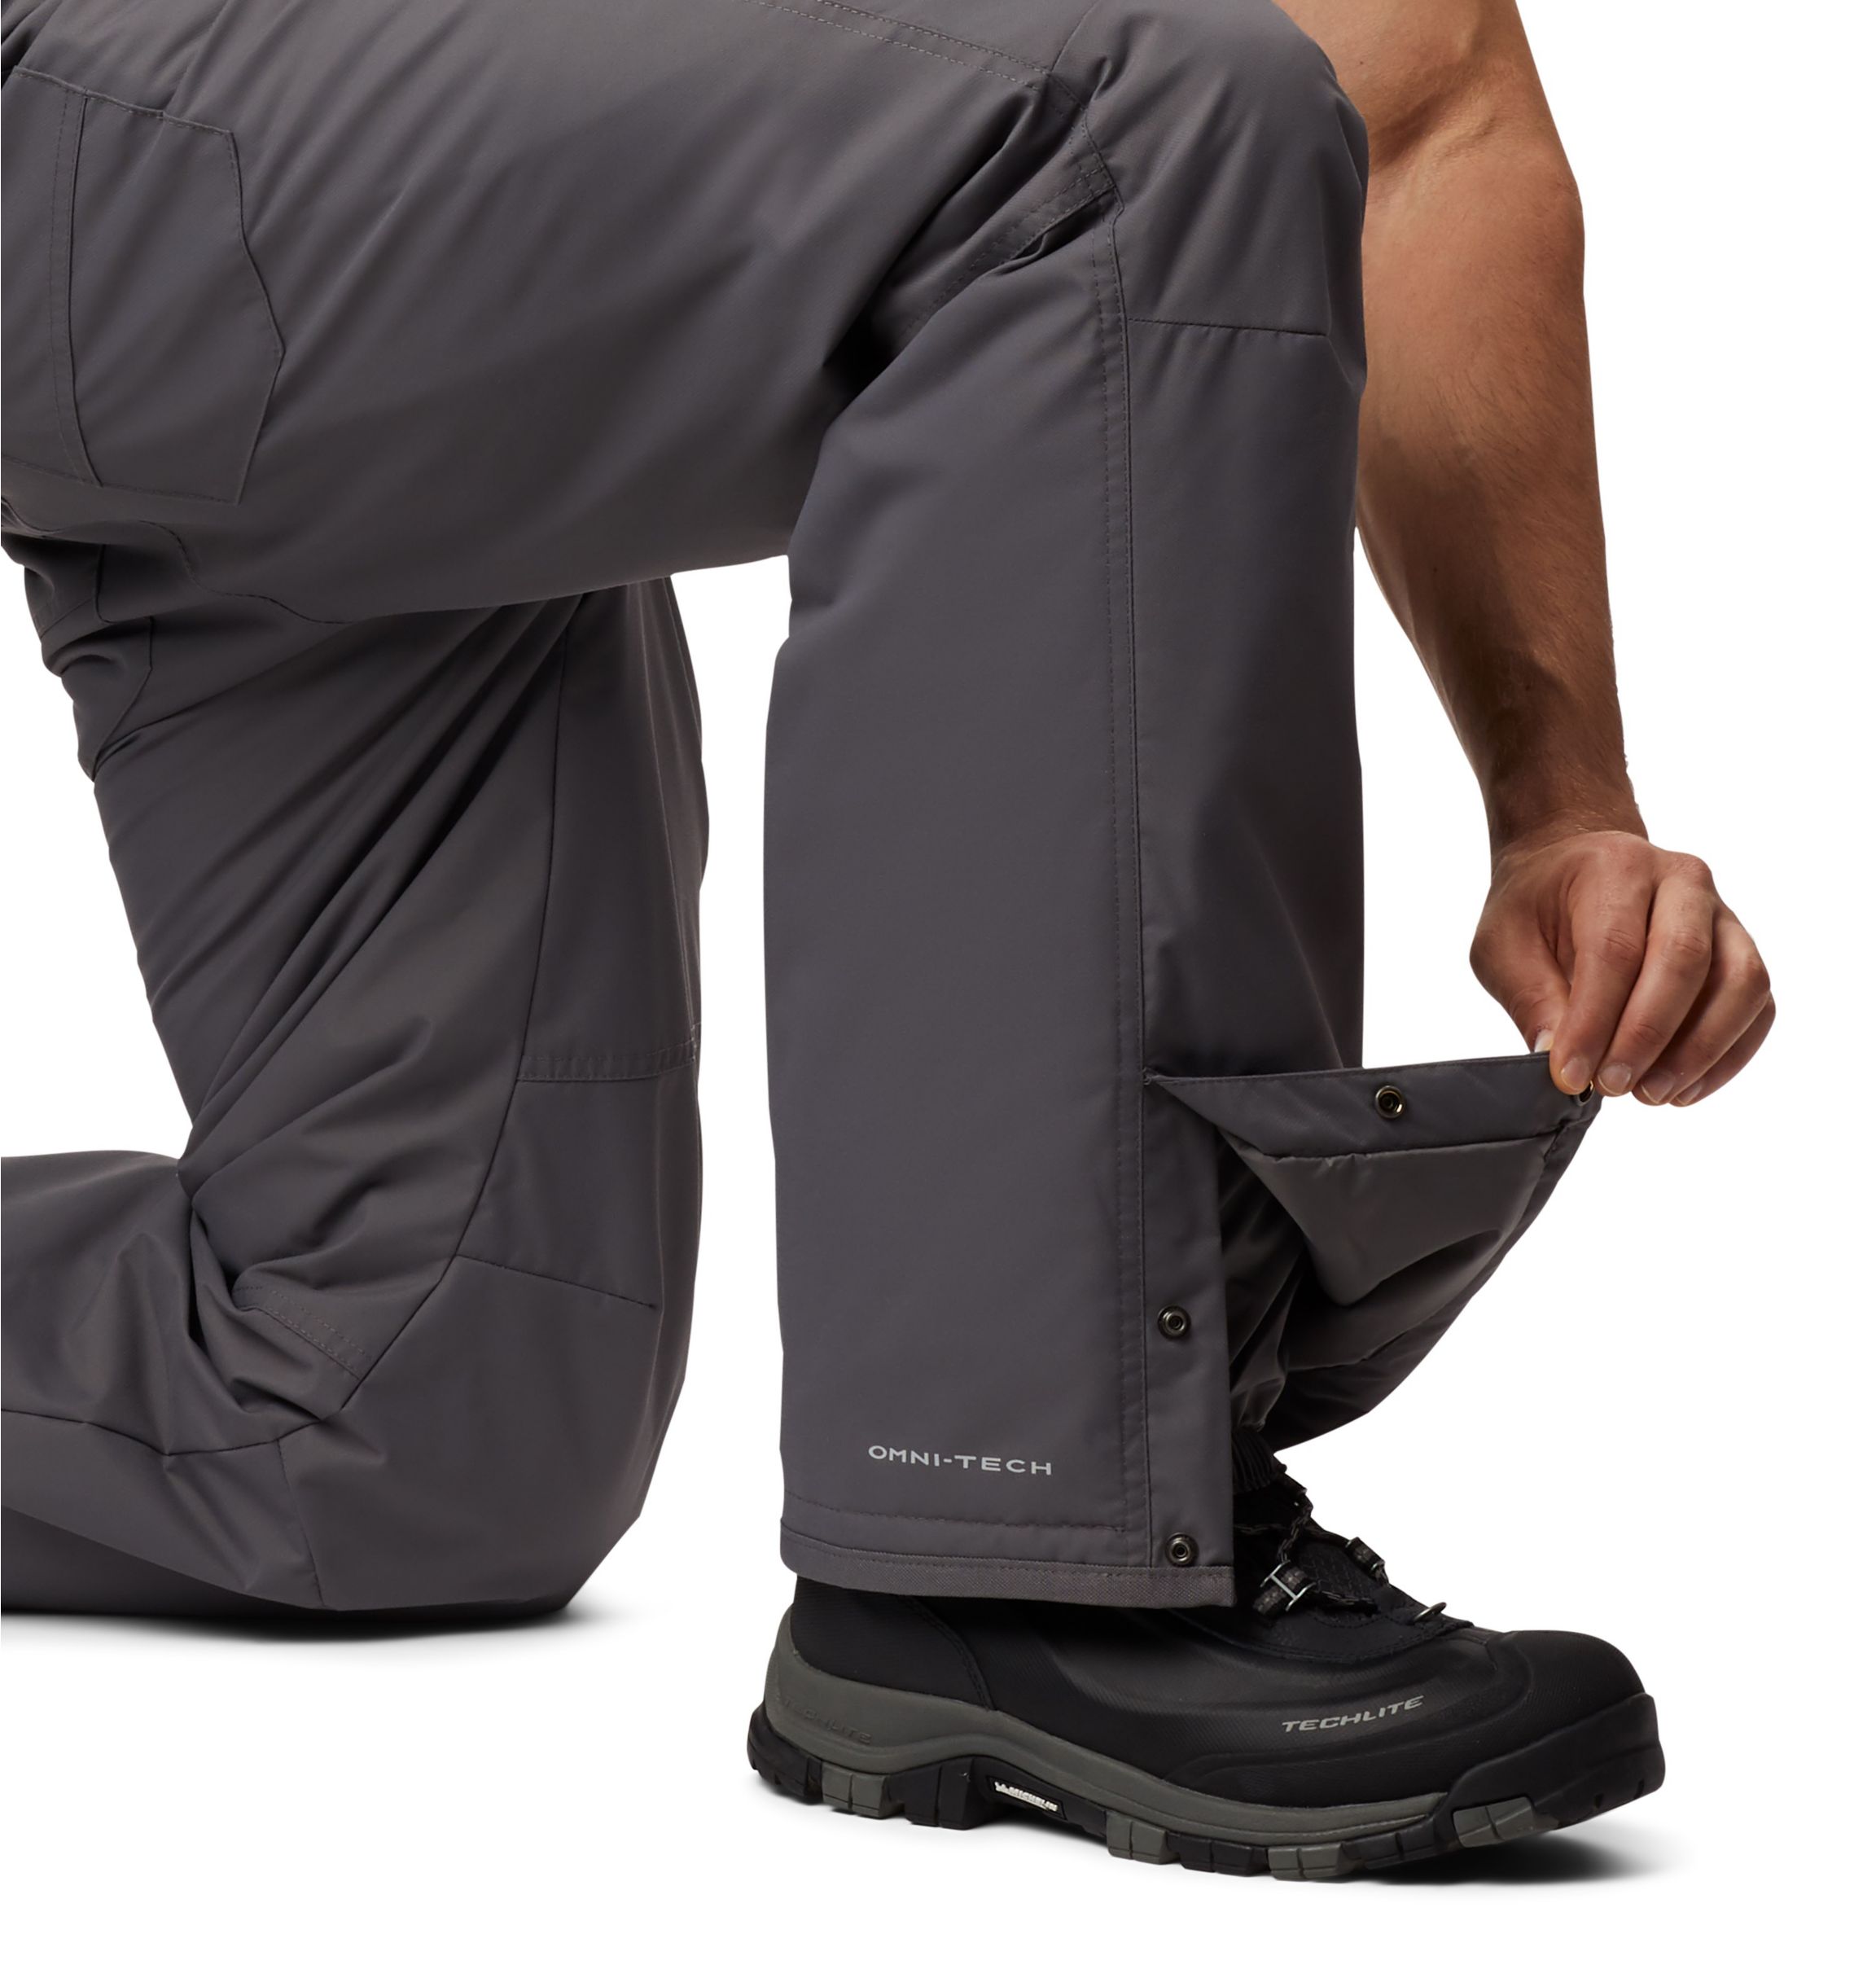 Men's Bugaboo IV™ Insulated Ski Pants